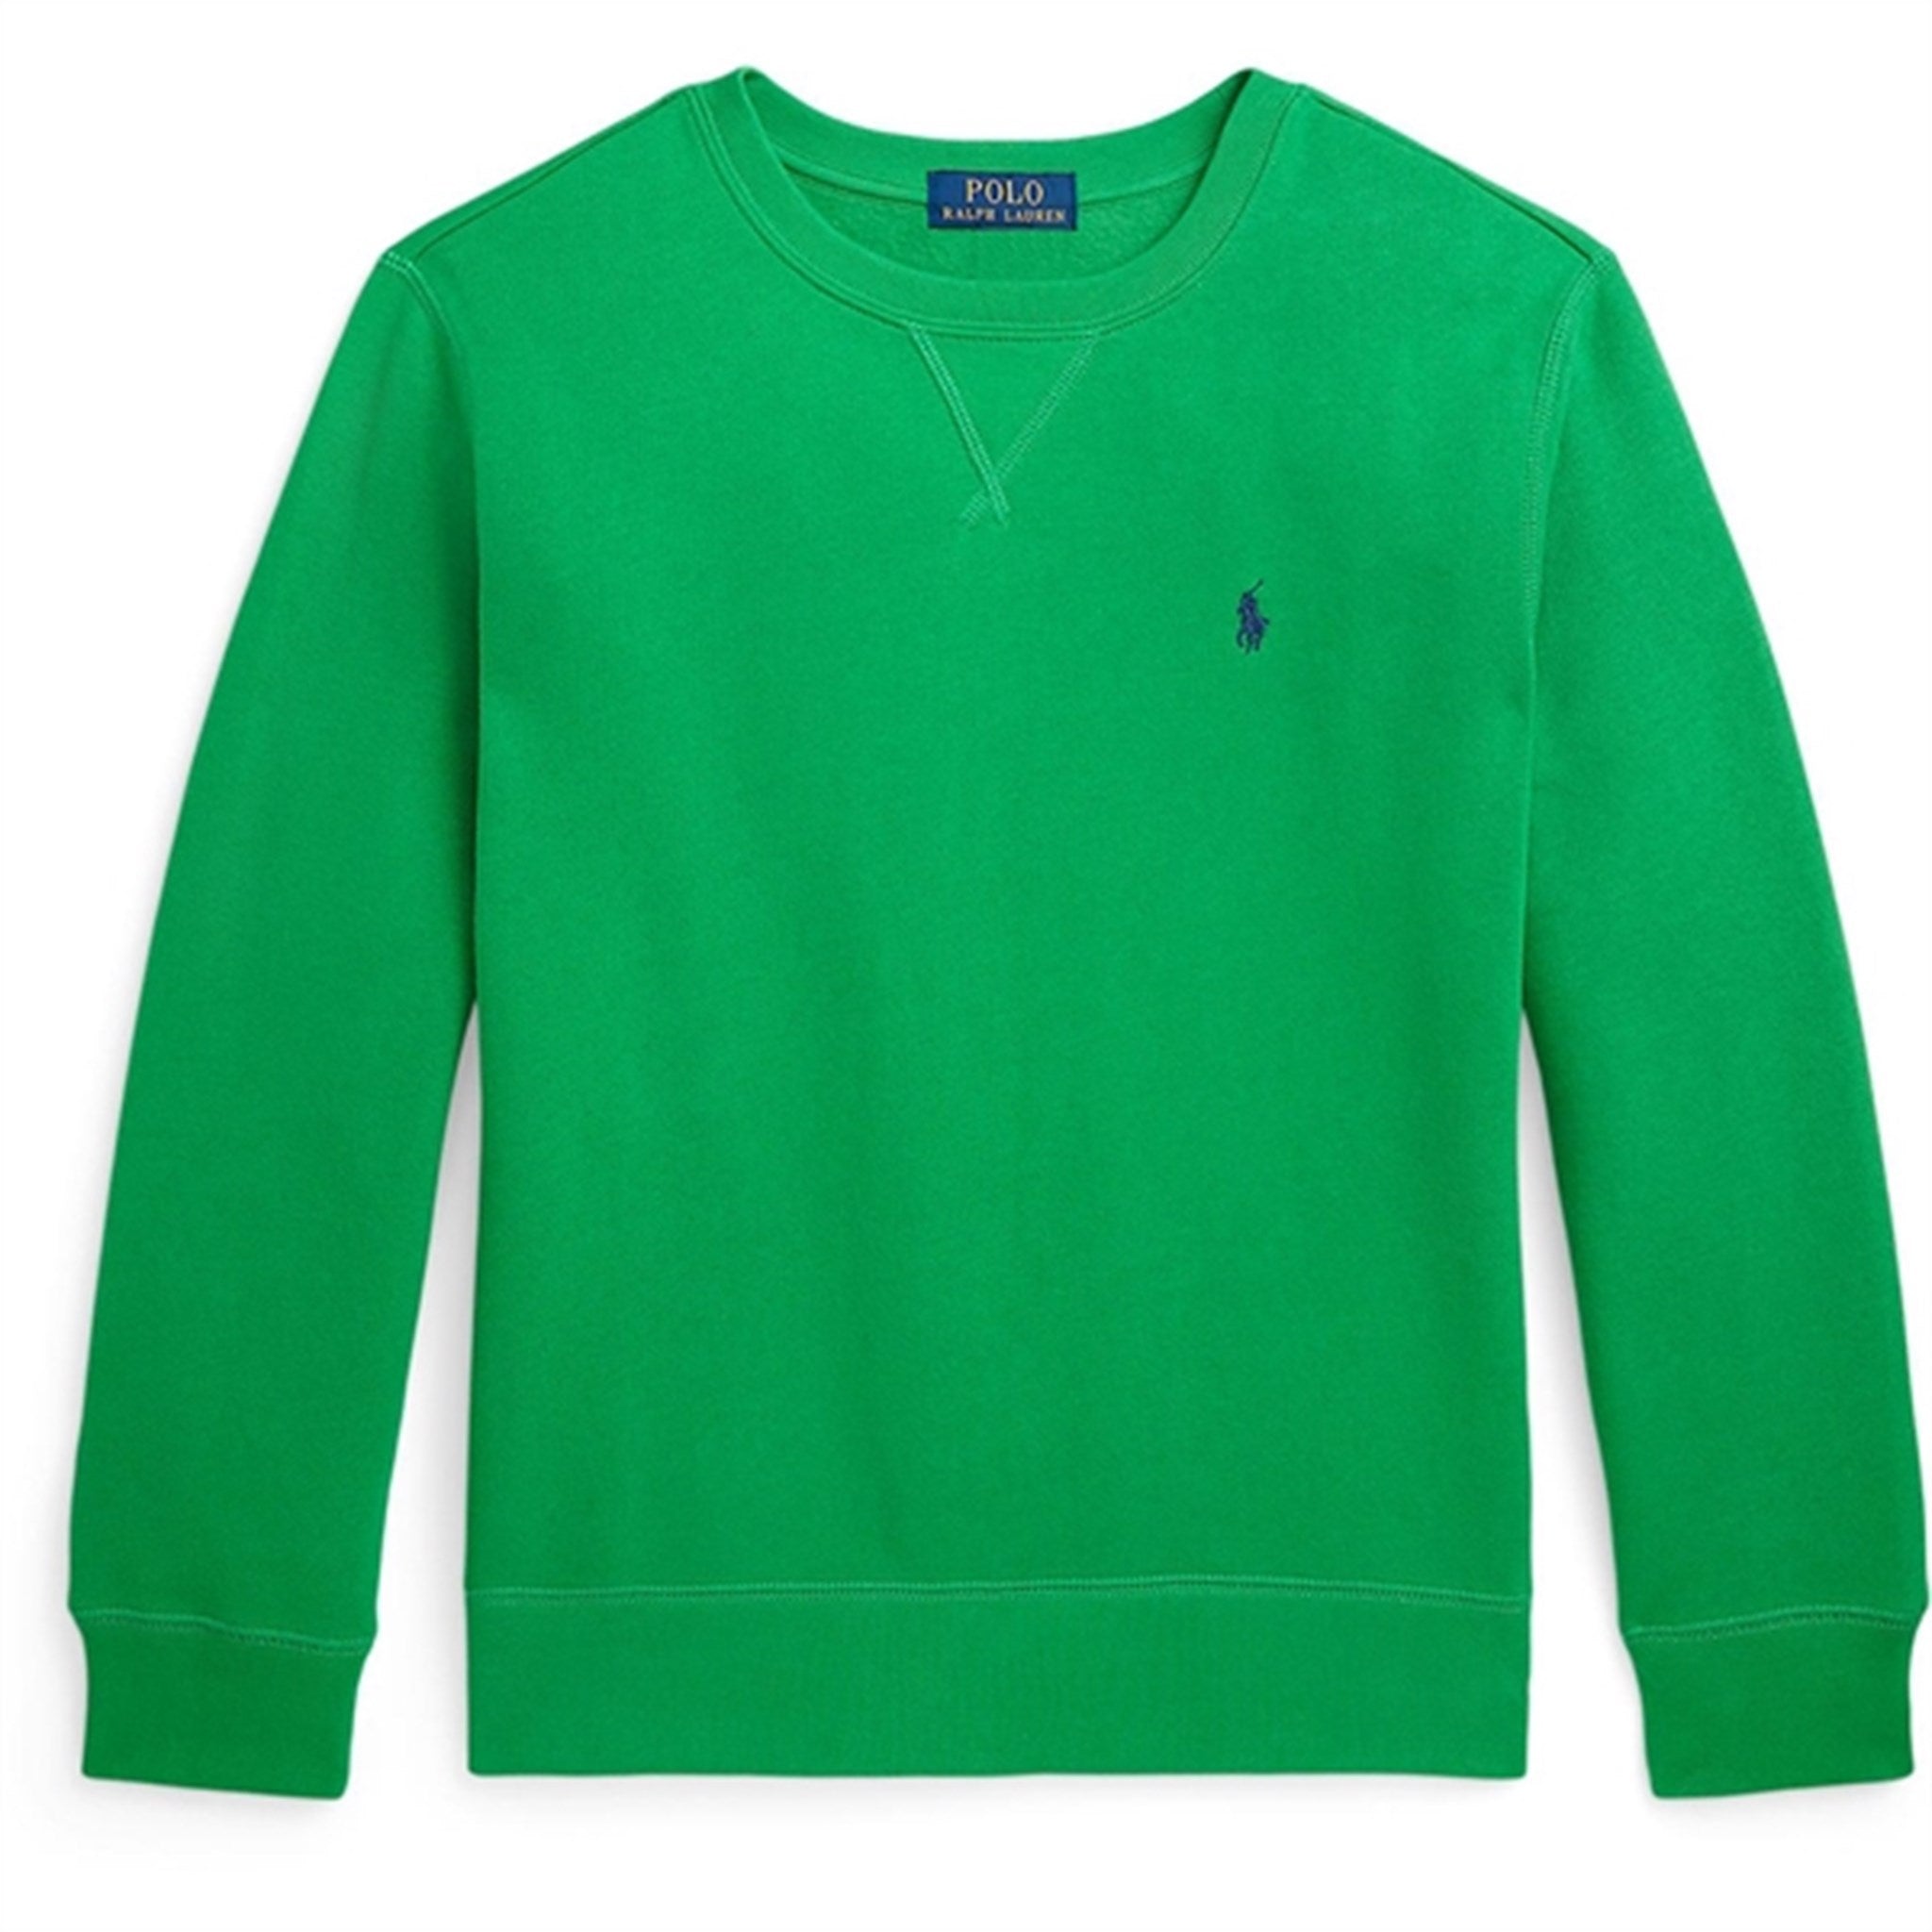 Polo Ralph Lauren Boys Sweatshirt Preppy Green